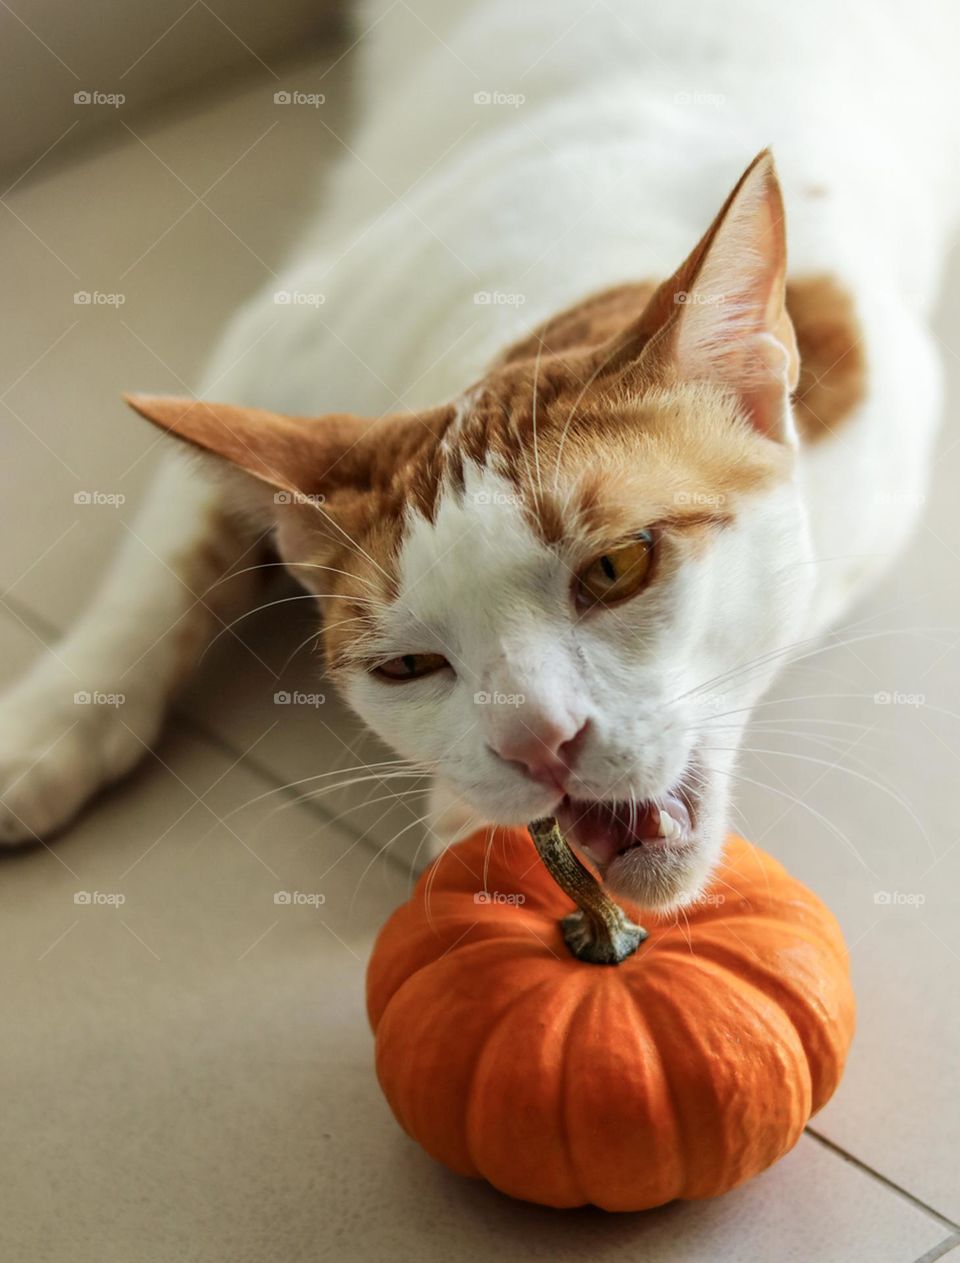 A Cat and a Pumpkin